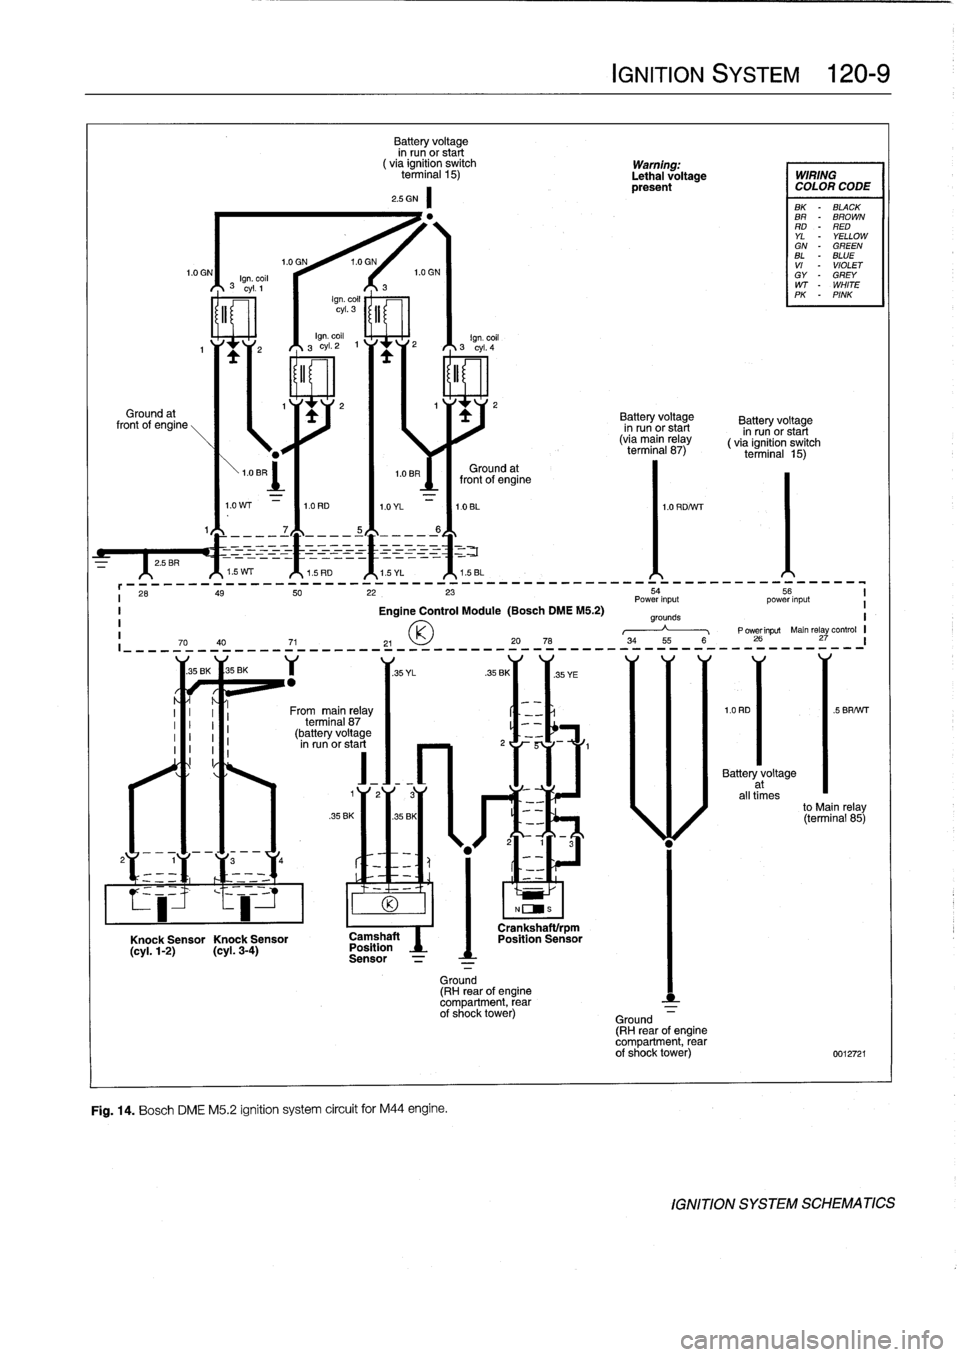 BMW 318i 1995 E36 Workshop Manual 
^1
.5WT
^1
.5RD
^1
.5YL
^1
.5BL
r

	

--__

	

____-

	

__-_

	

___-_

	

-___-_____--__--

	

-____-___

	

____-
i
26
g
5022
23

	

54

	

5

I

	

Power
input

	

power
input
I

	

Engine
Contro